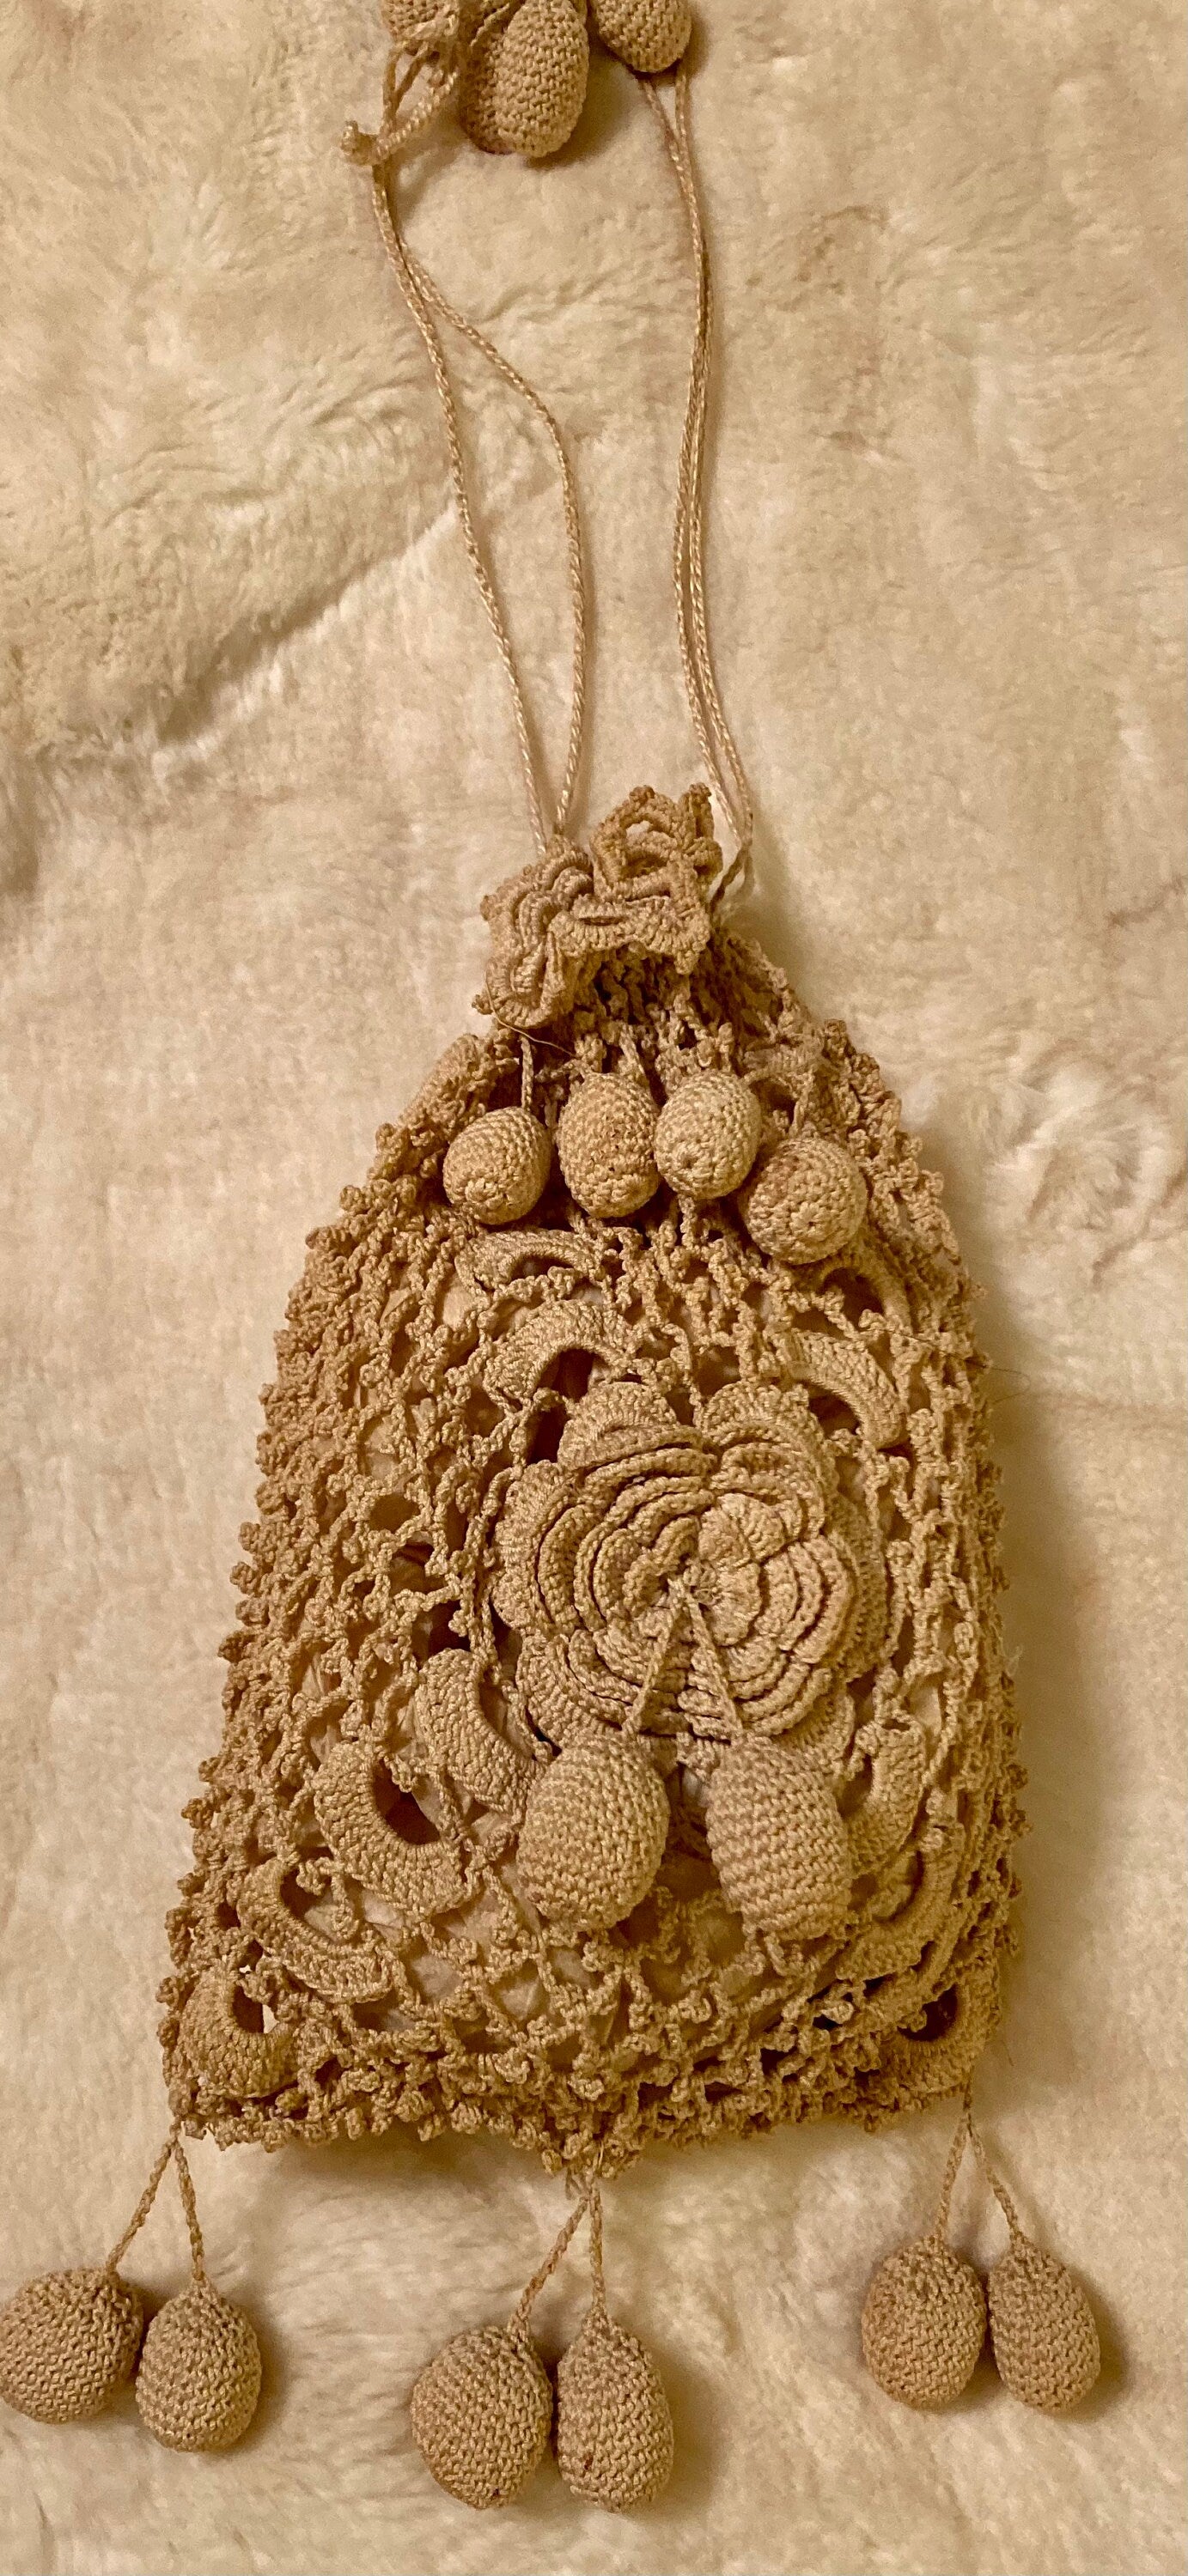 Antique 1900s crochet wristlet handbag